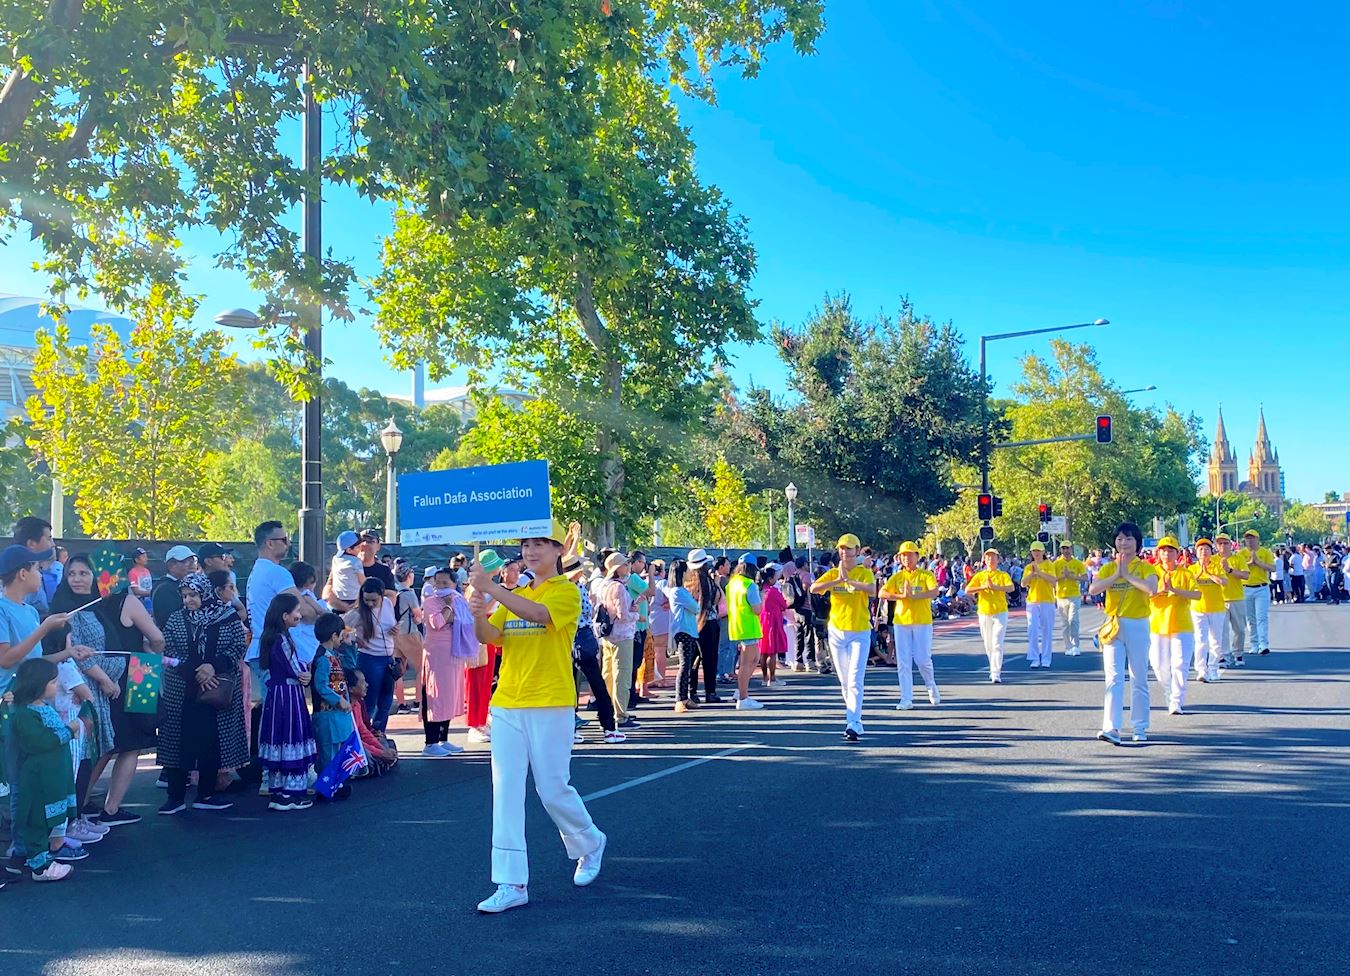 Image for article Аделаїда, Австралія. Практикувальники показали красу Фалунь Дафа у параді на честь Дня незалежності Австралії